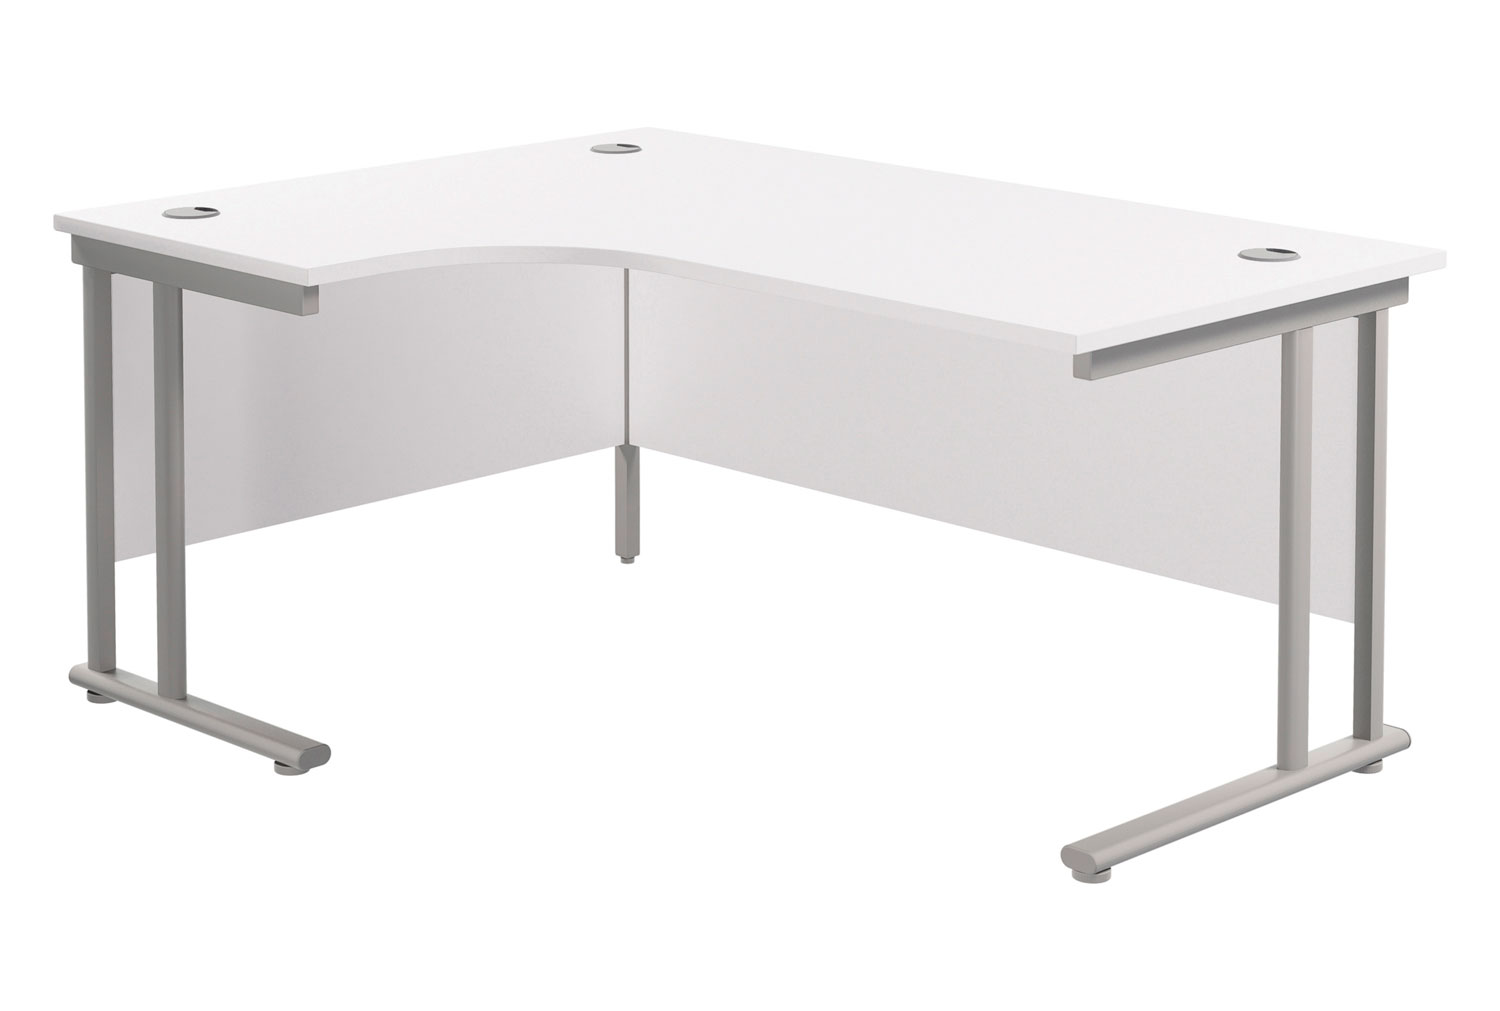 Progress II Left Hand Ergonomic Office Desk, 160wx120/80dx73h (cm), Silver Frame, White, Express Delivery